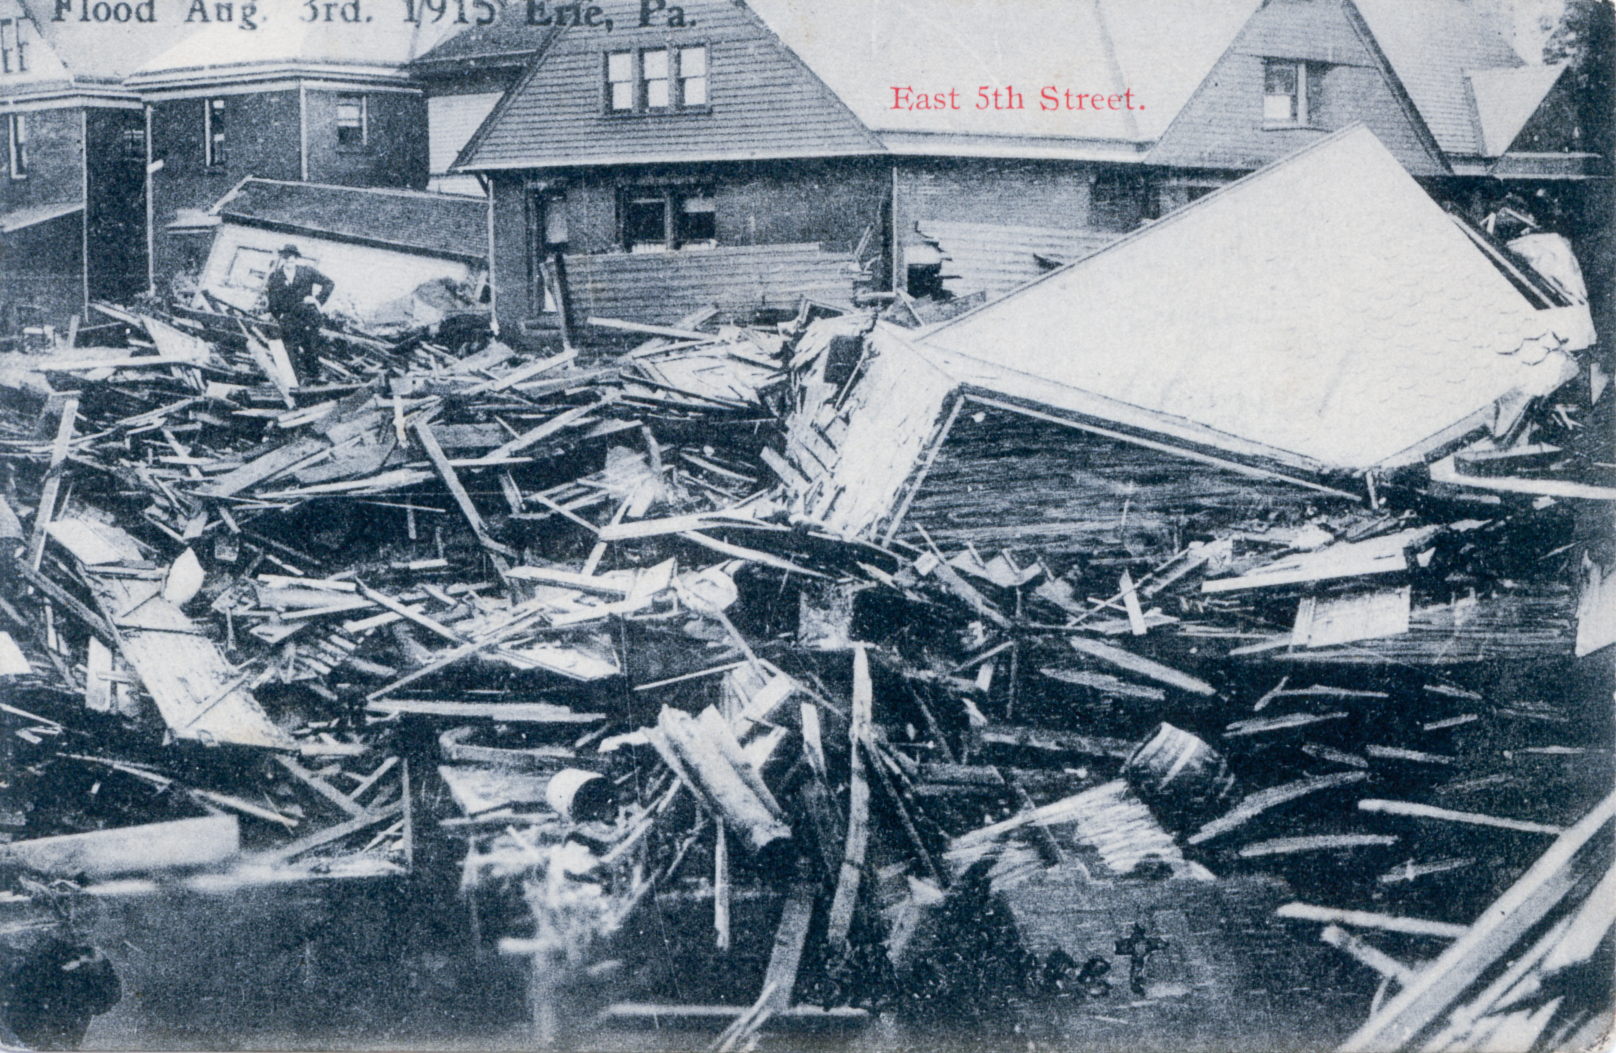 East 5th Street, Flood Aug 3rd 1915, Erie PA